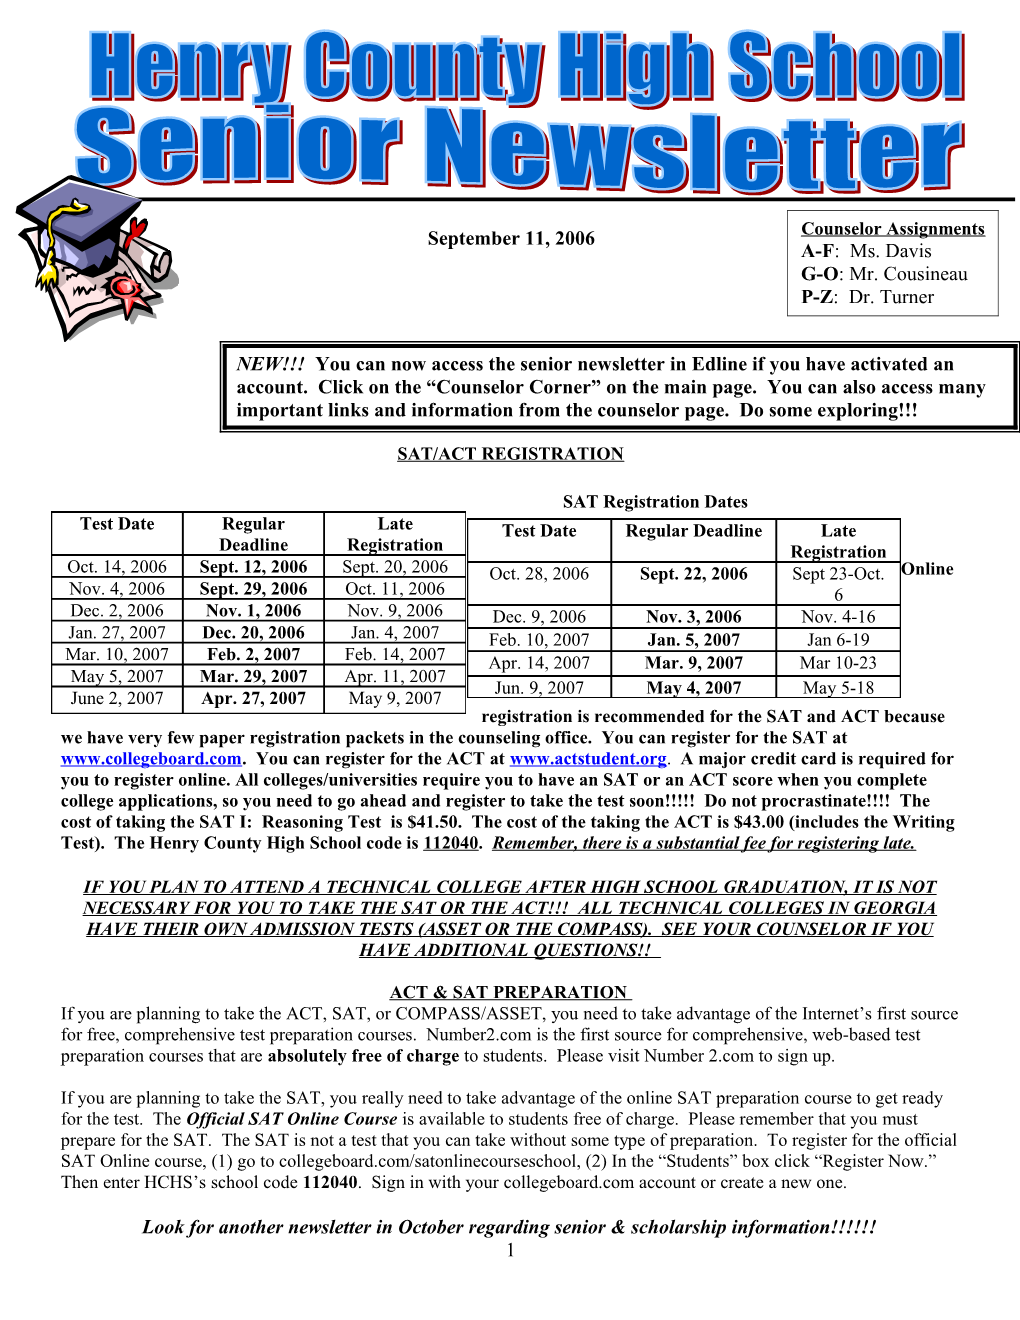 Look for Another Newsletter in October Regarding Senior & Scholarship Information